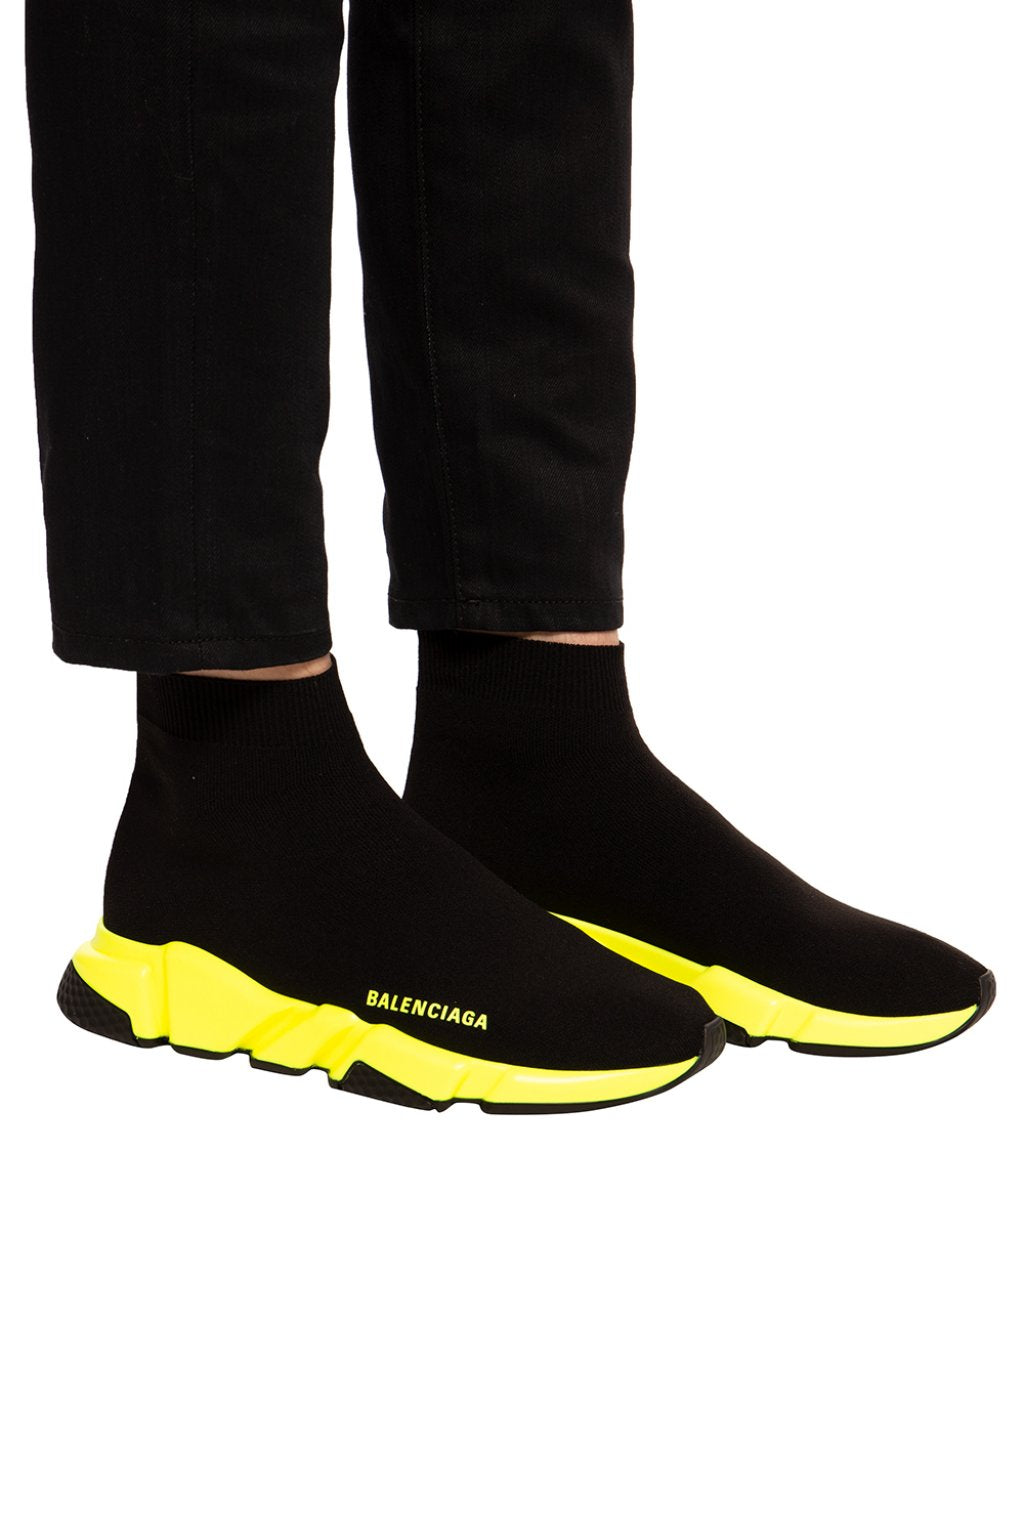 Speed Sock neon yellow Stretch-Knit Slip-On